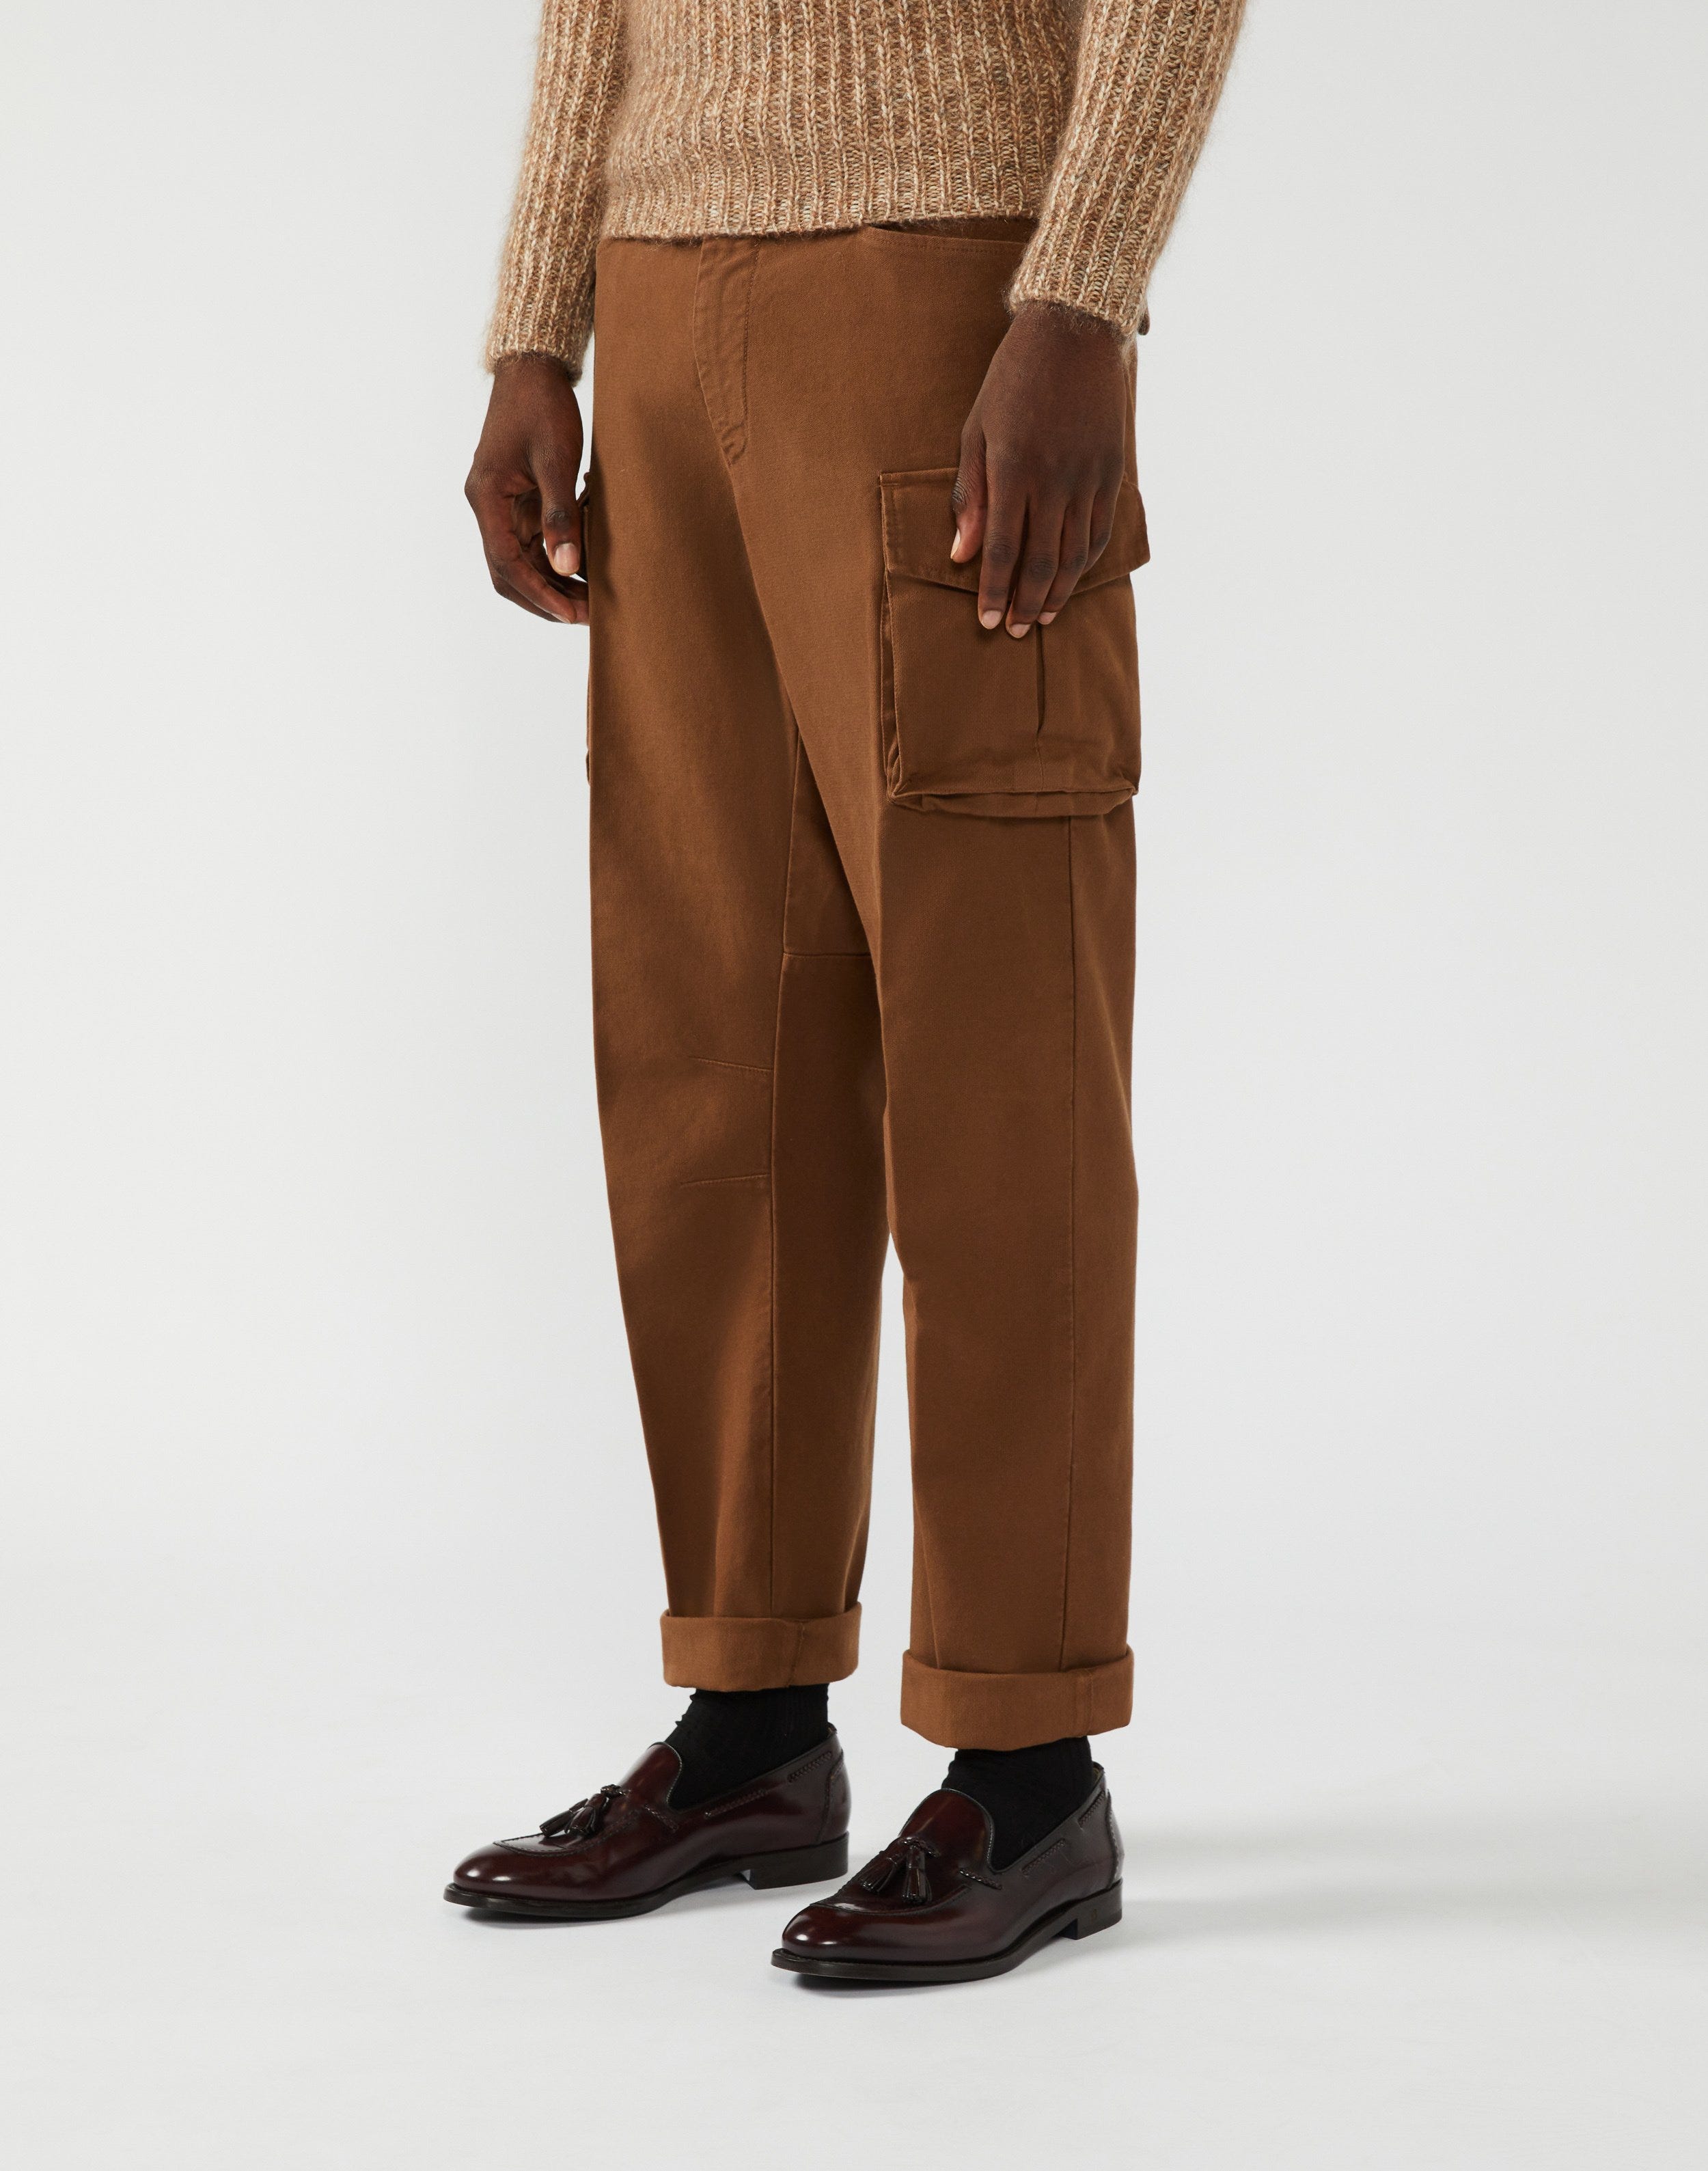 Cargo pants in camel-brown organic cotton